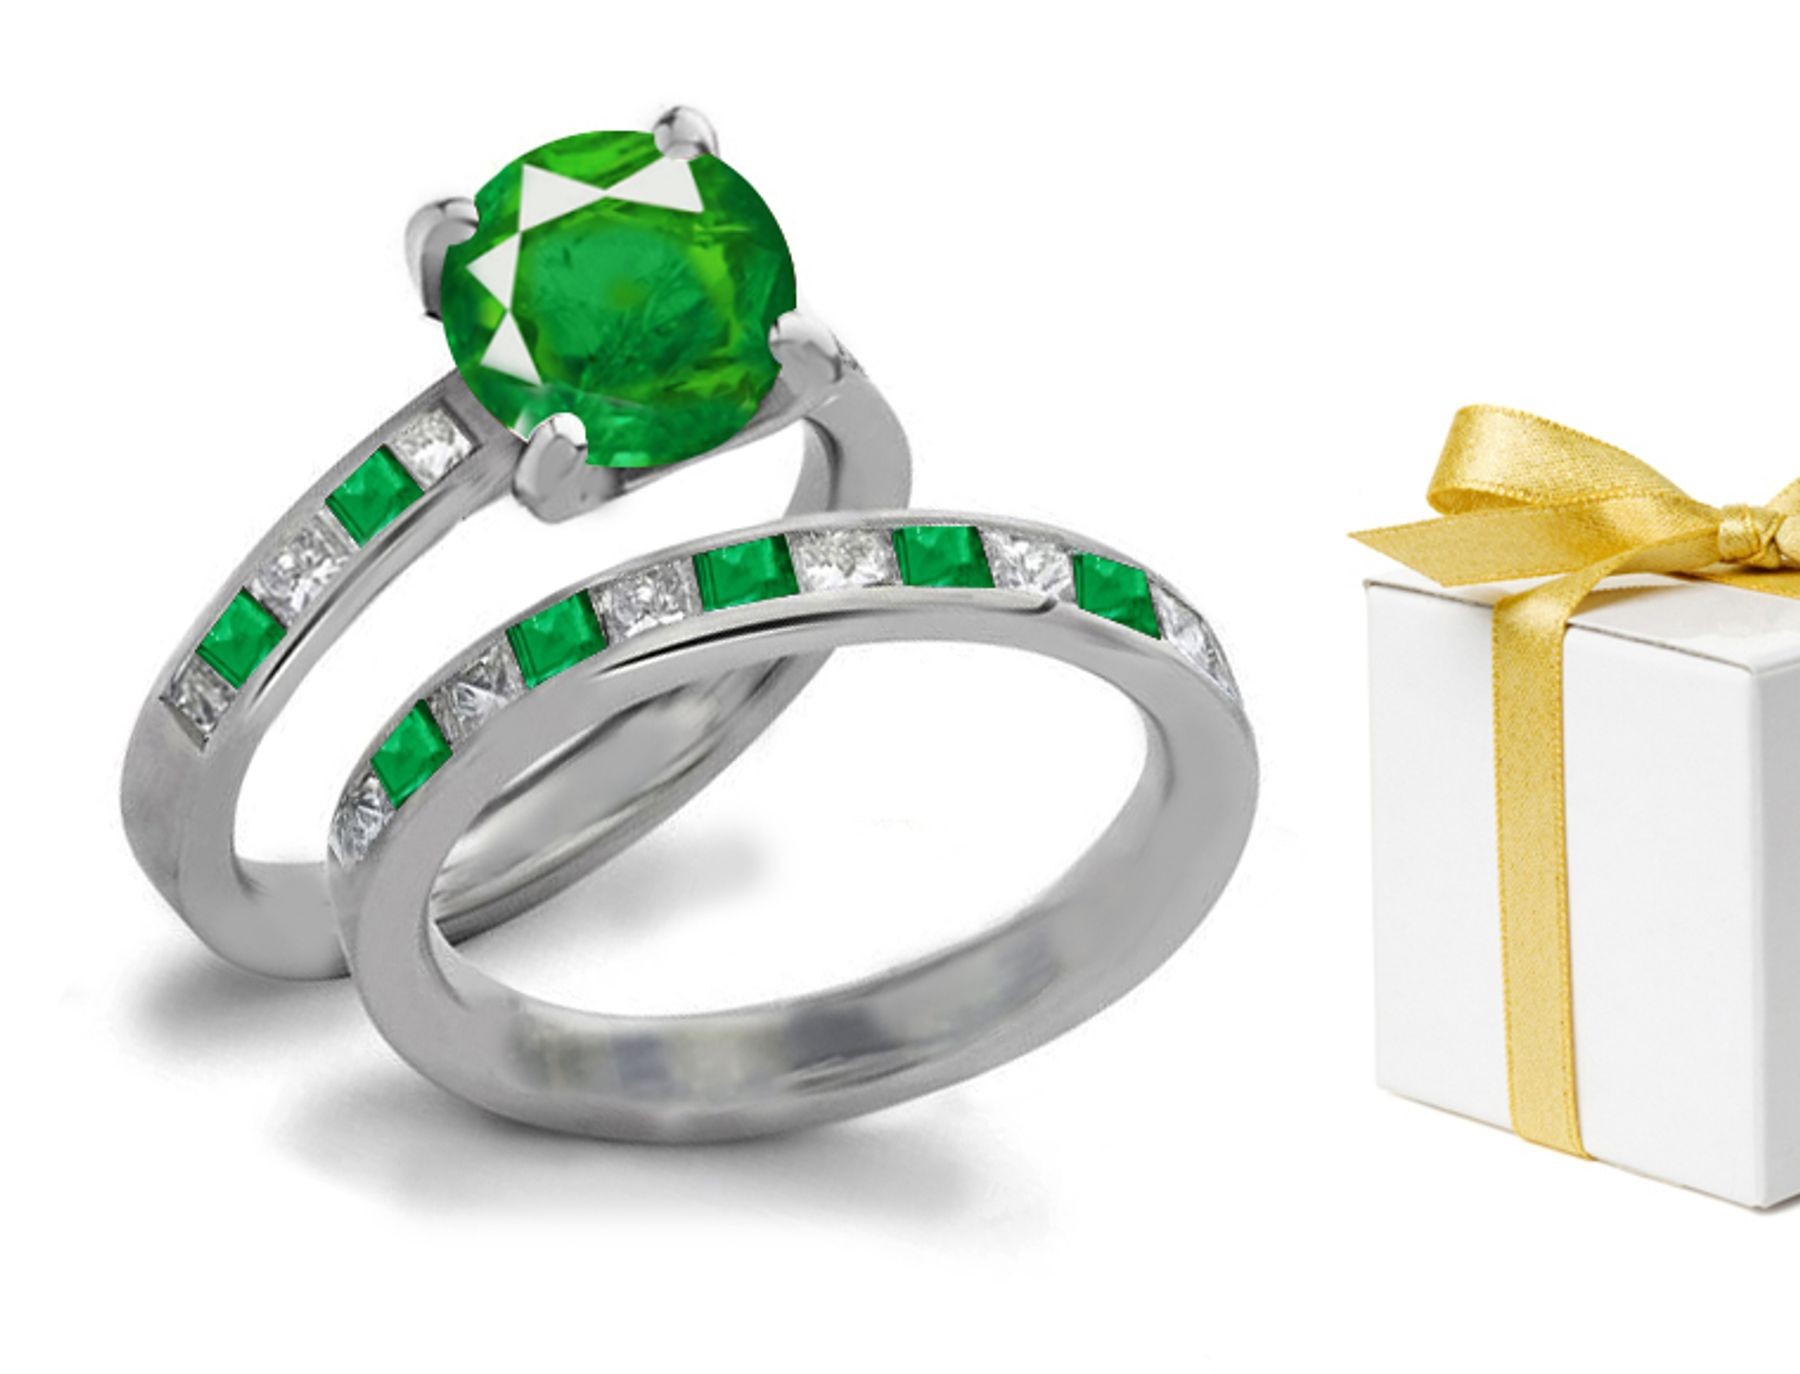 Popular Prices: Perfect Channel Set Genuine Emerald With Brilliant Diamonds Putnam Anniversary Ring 14k White Gold